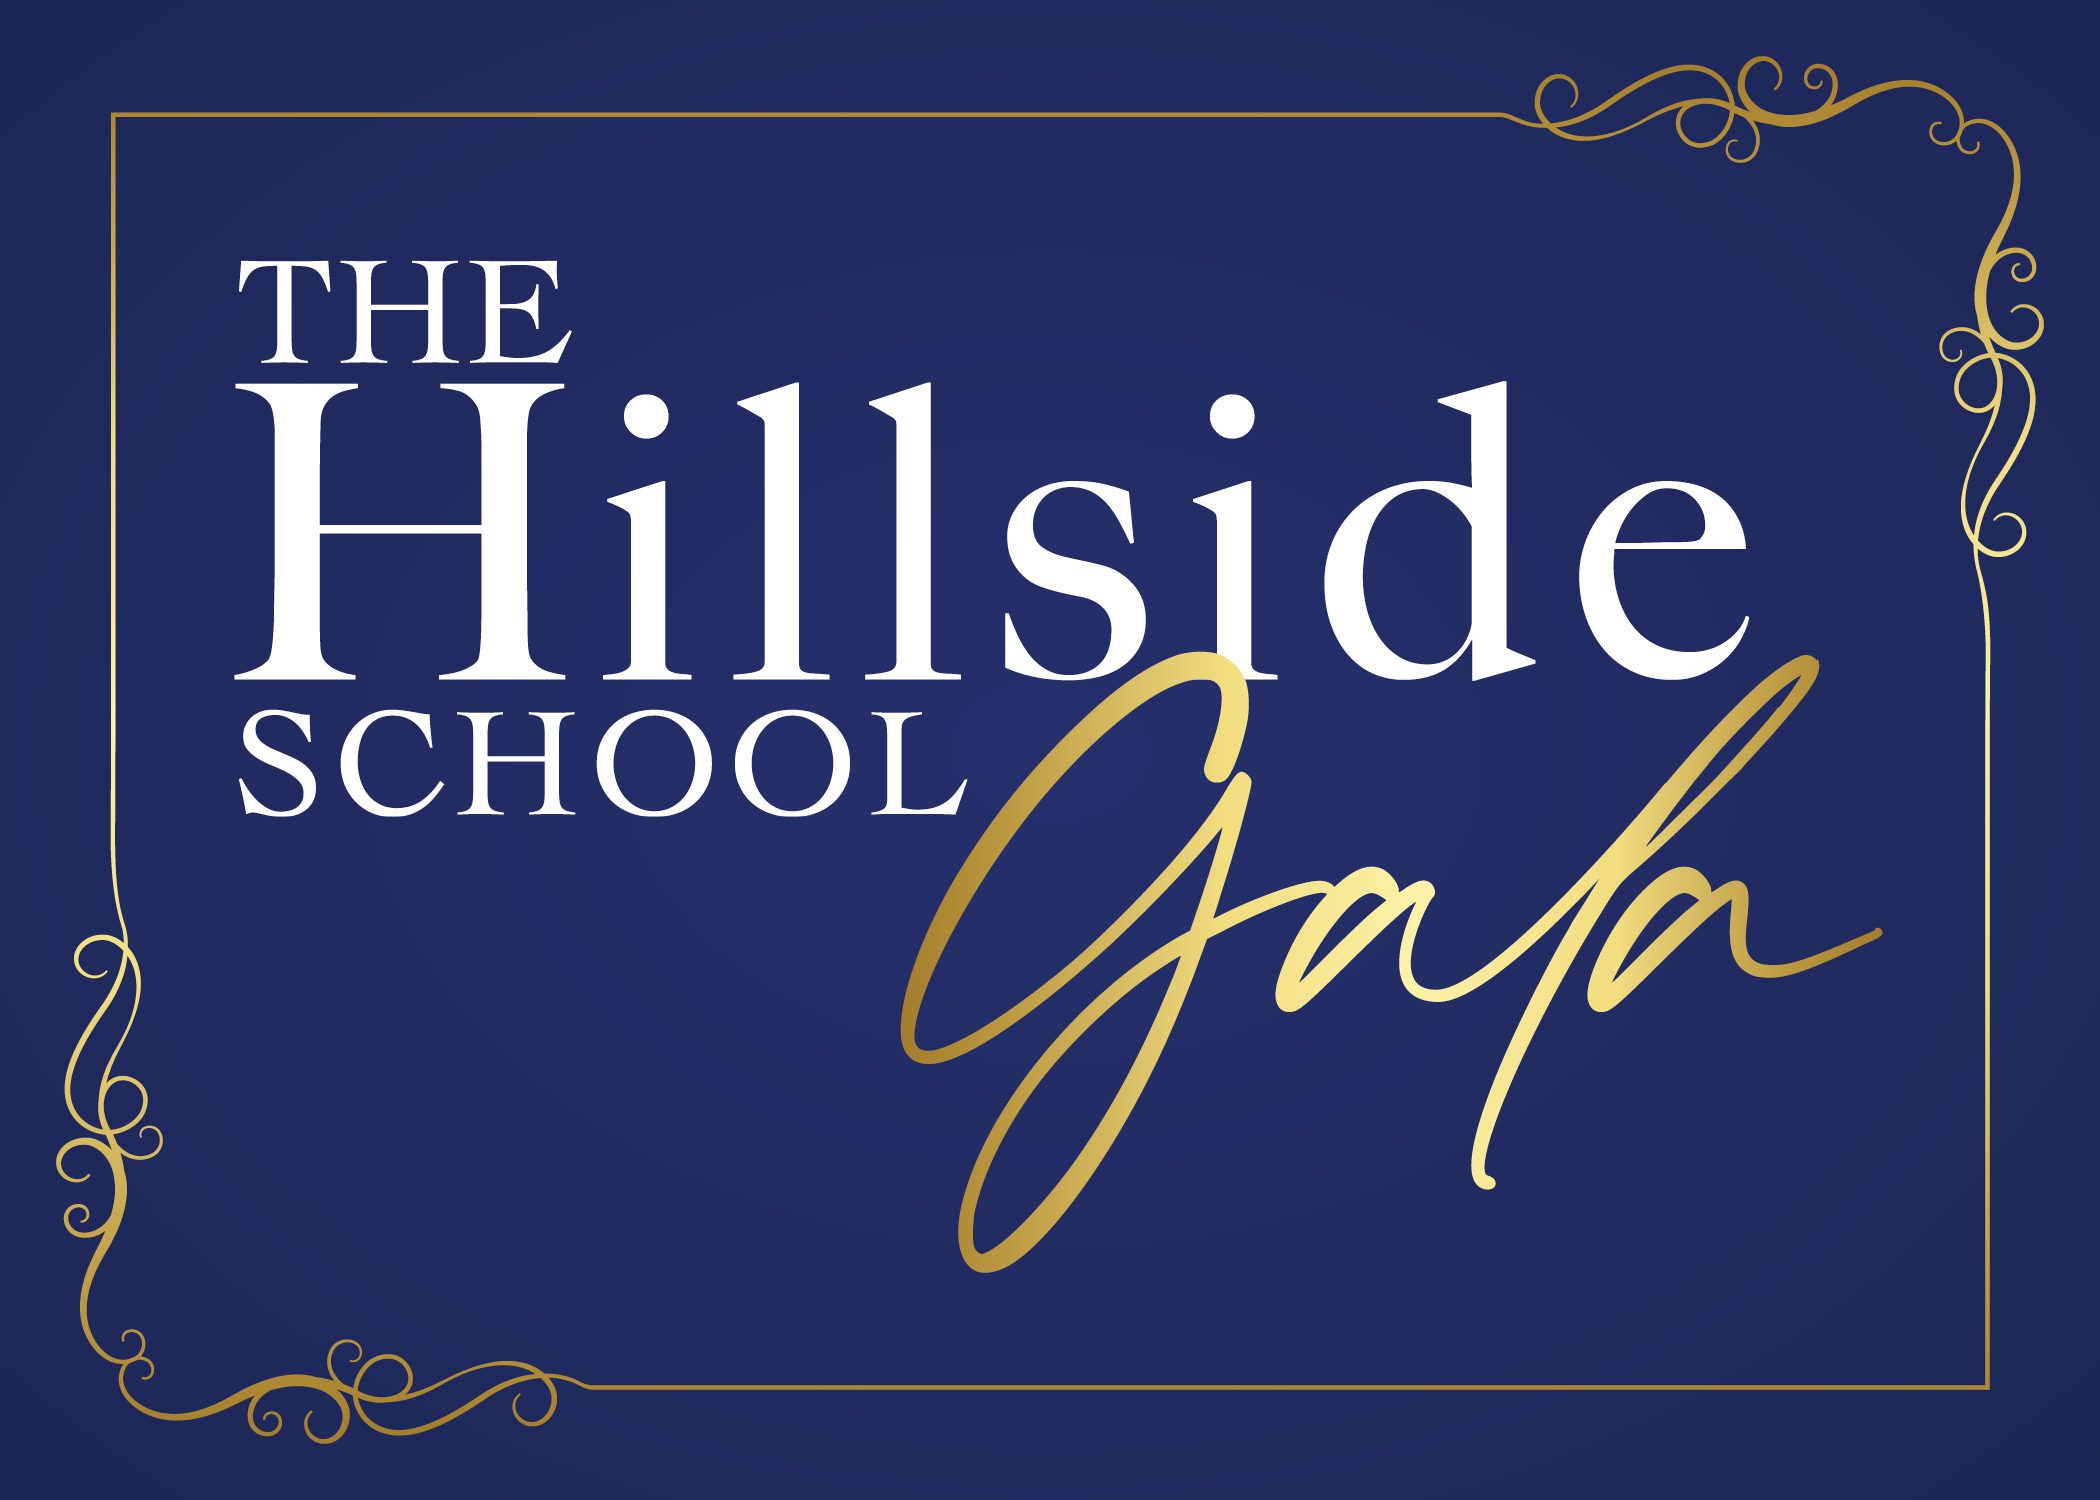 The Hillside School Gala